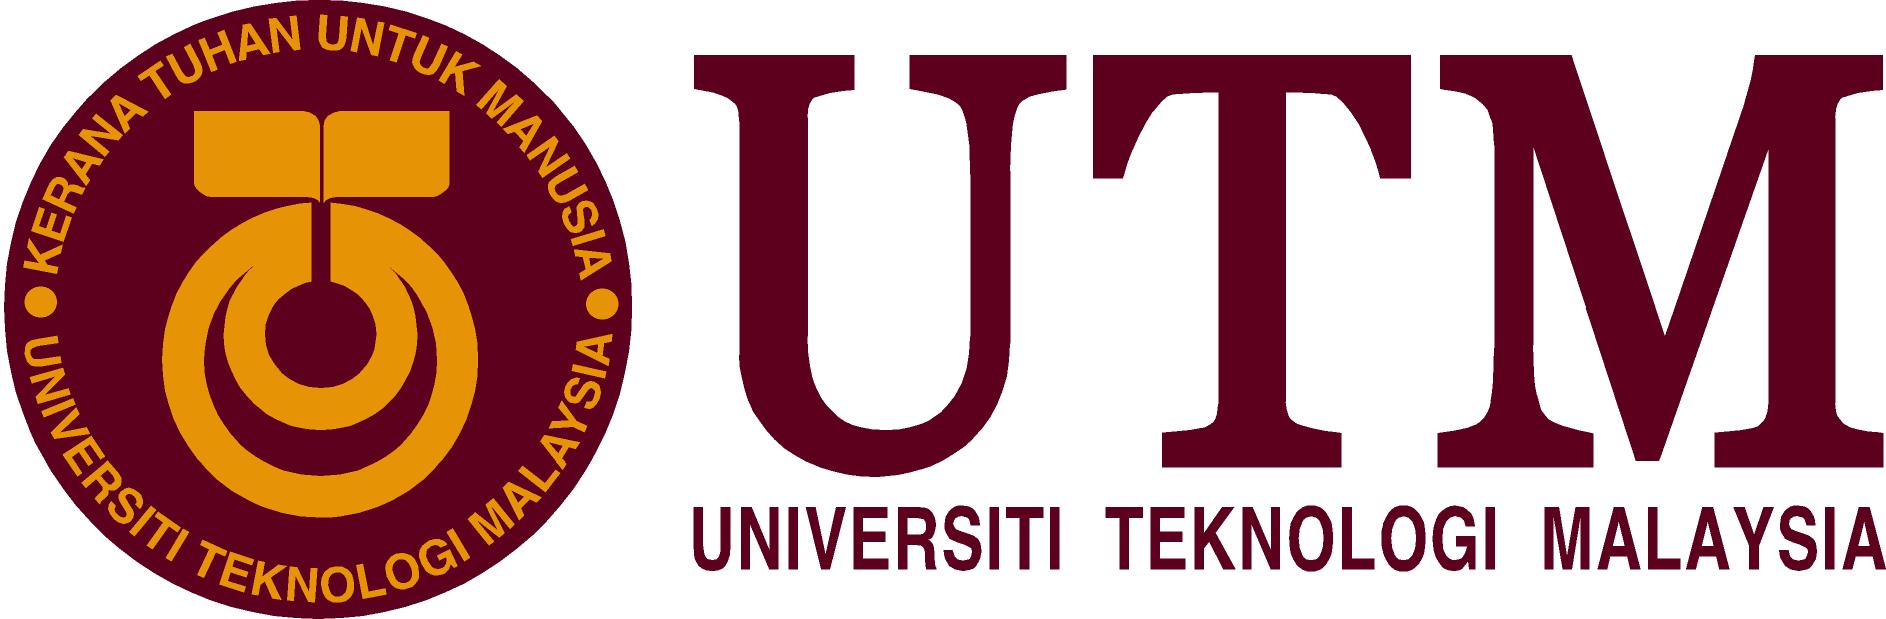 UNIVERSITI TEKNOLOGI MALAYSIA Logo photo - 1